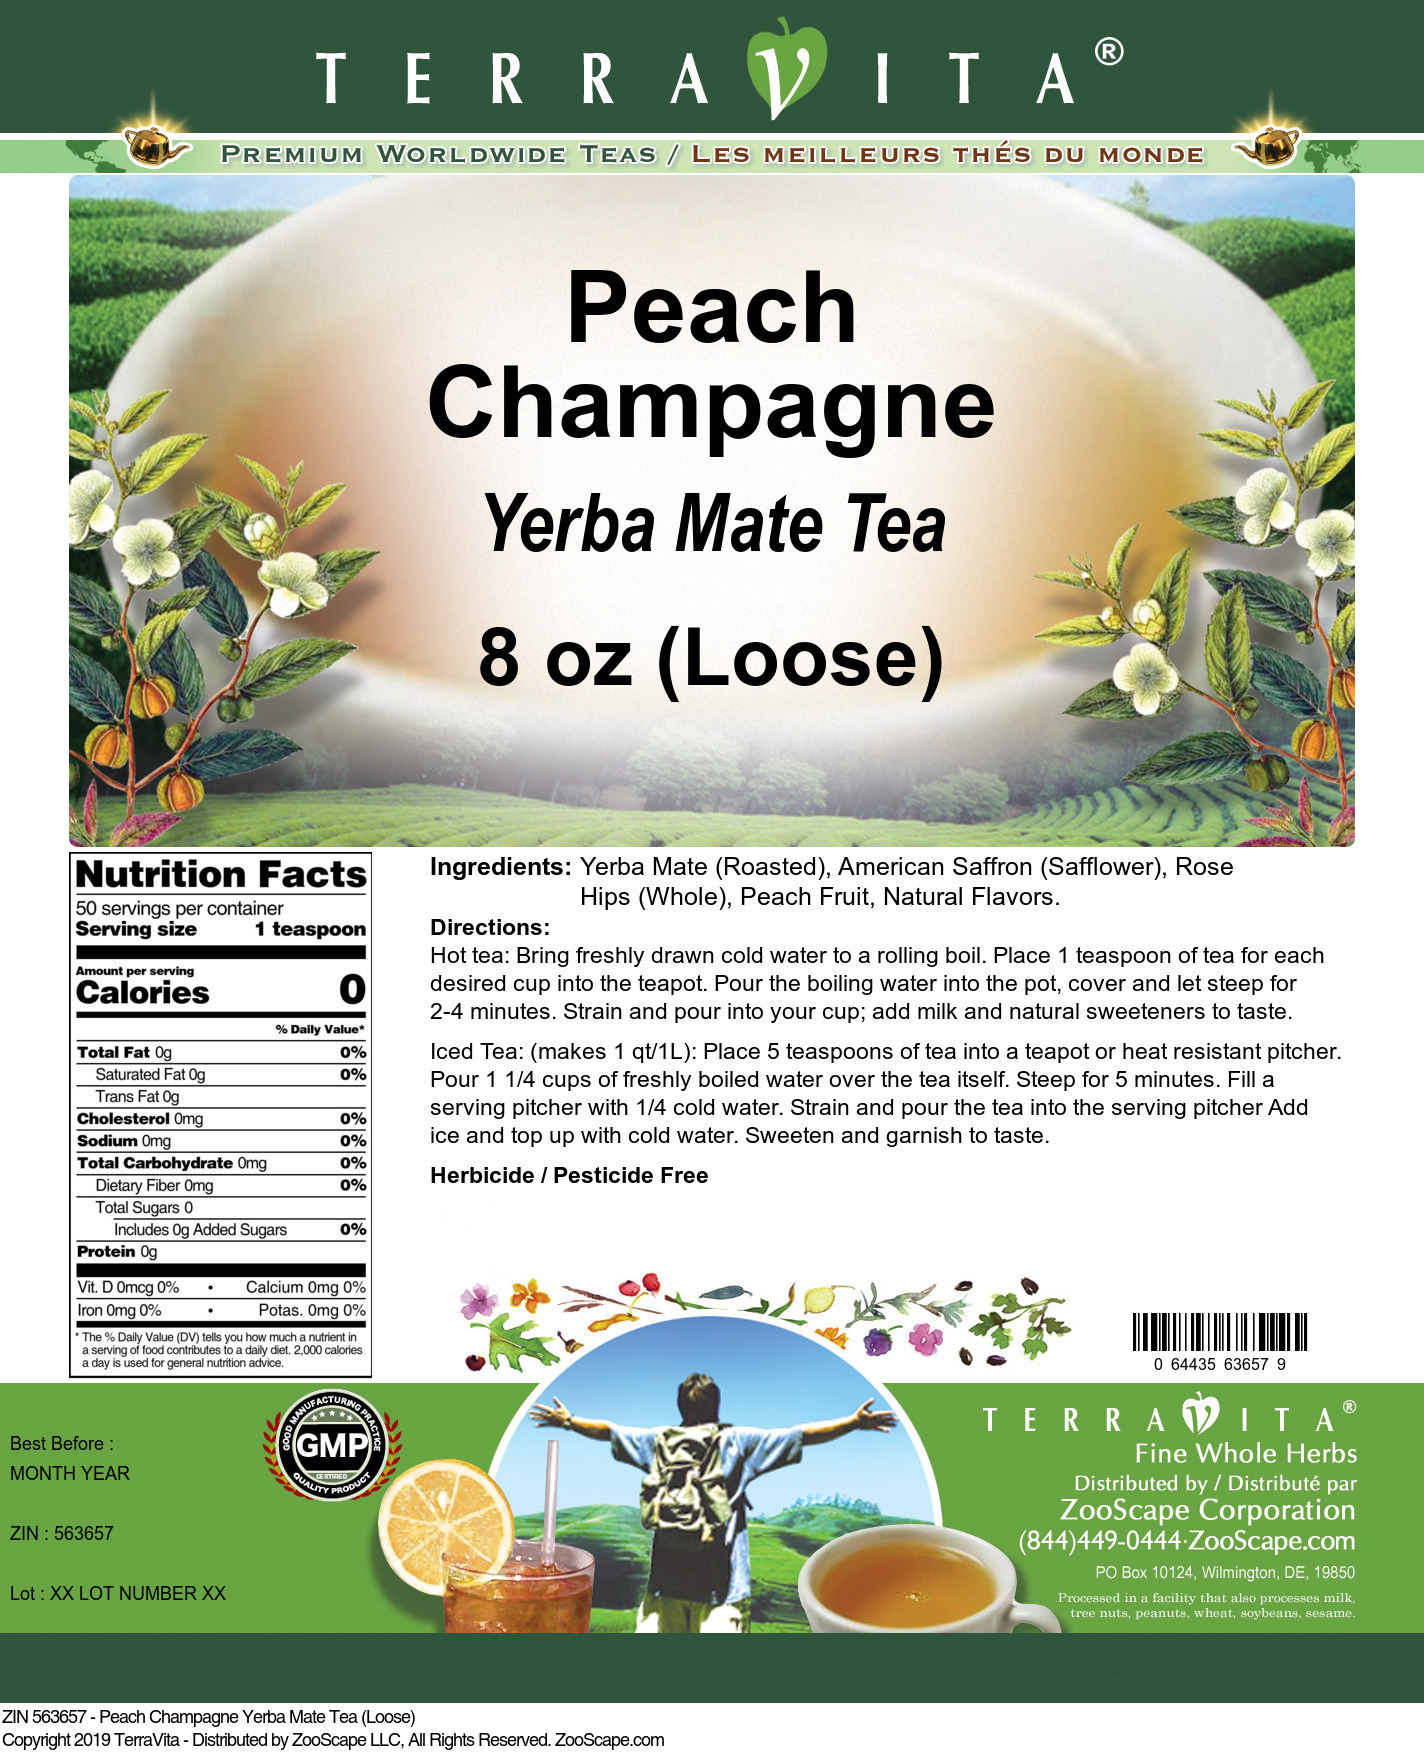 Peach Champagne Yerba Mate Tea (Loose) - Label